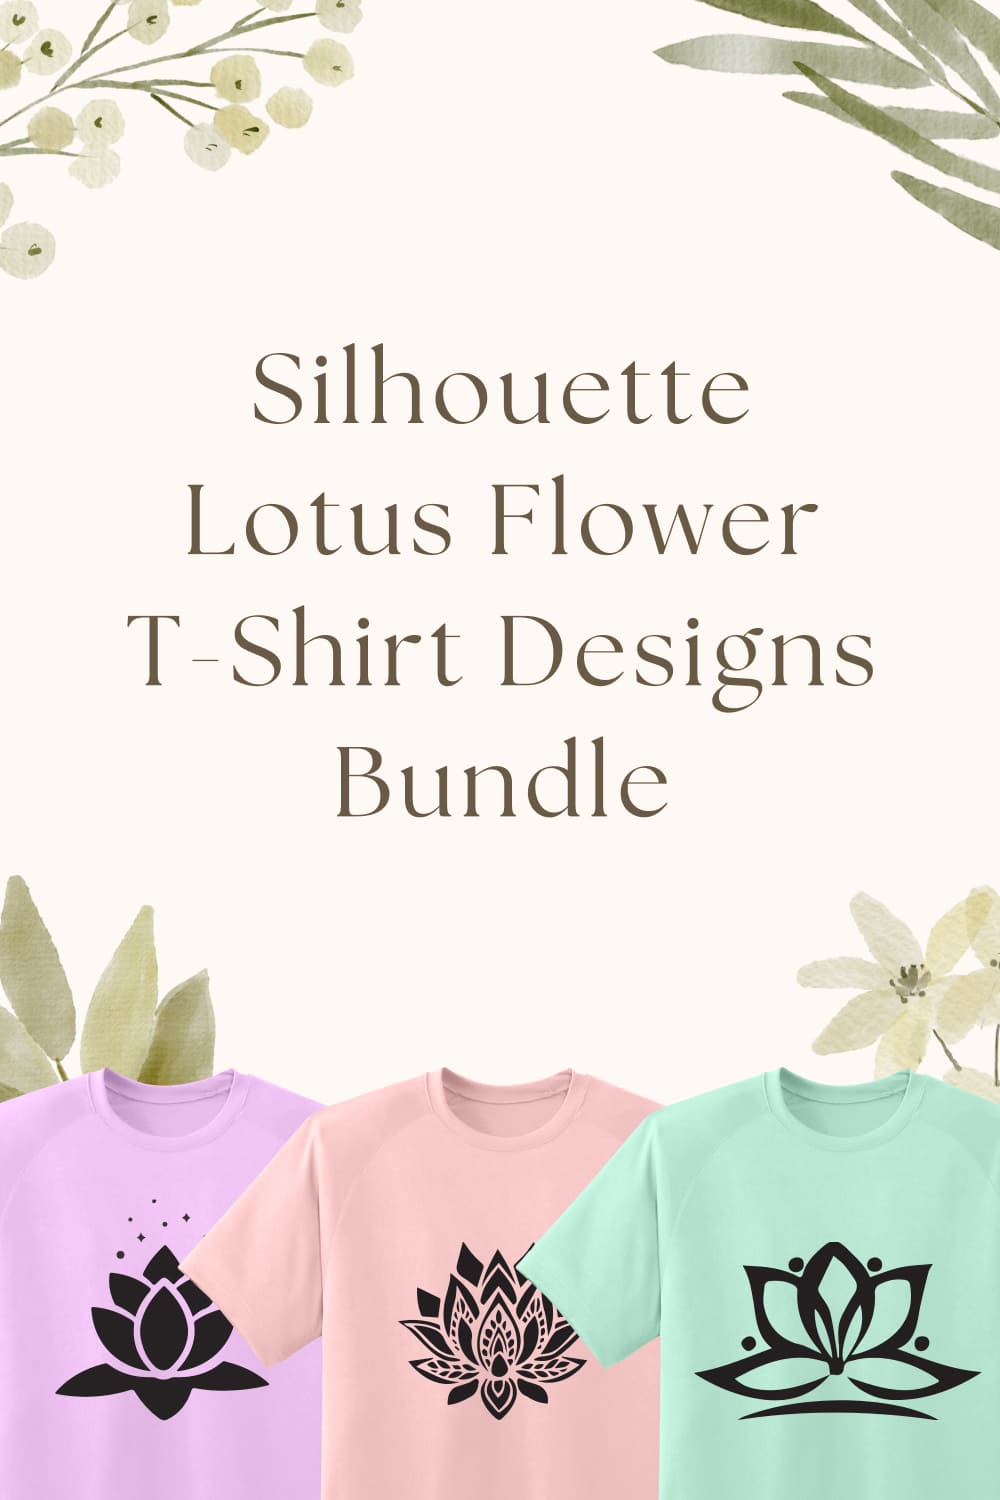 silhouette lotus flower t shirt designs bundle 03 382